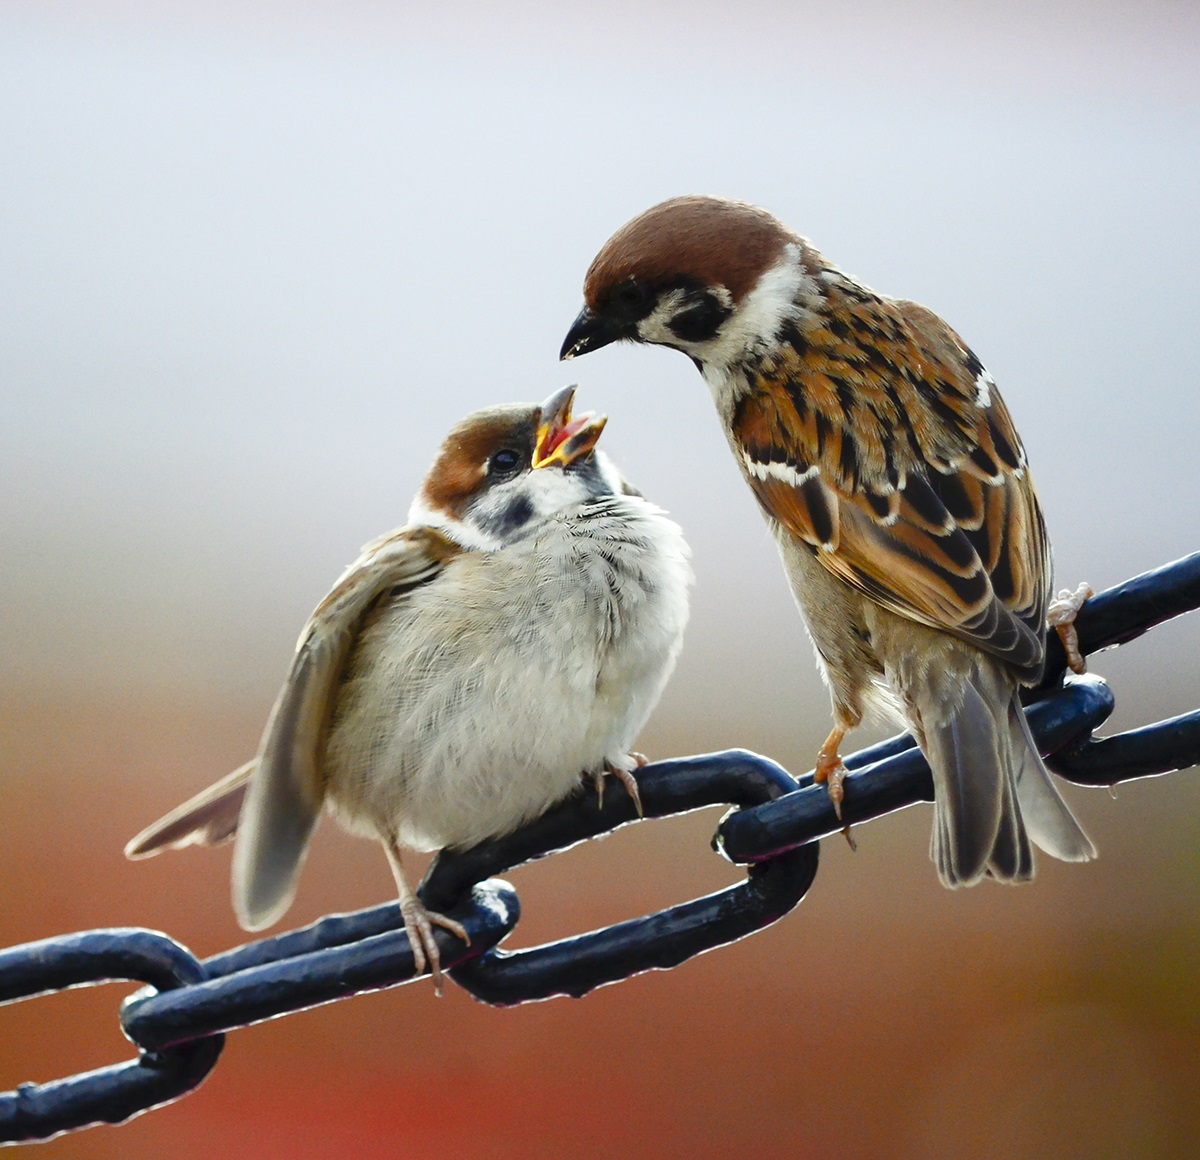 Felt Sparrow feeds chick